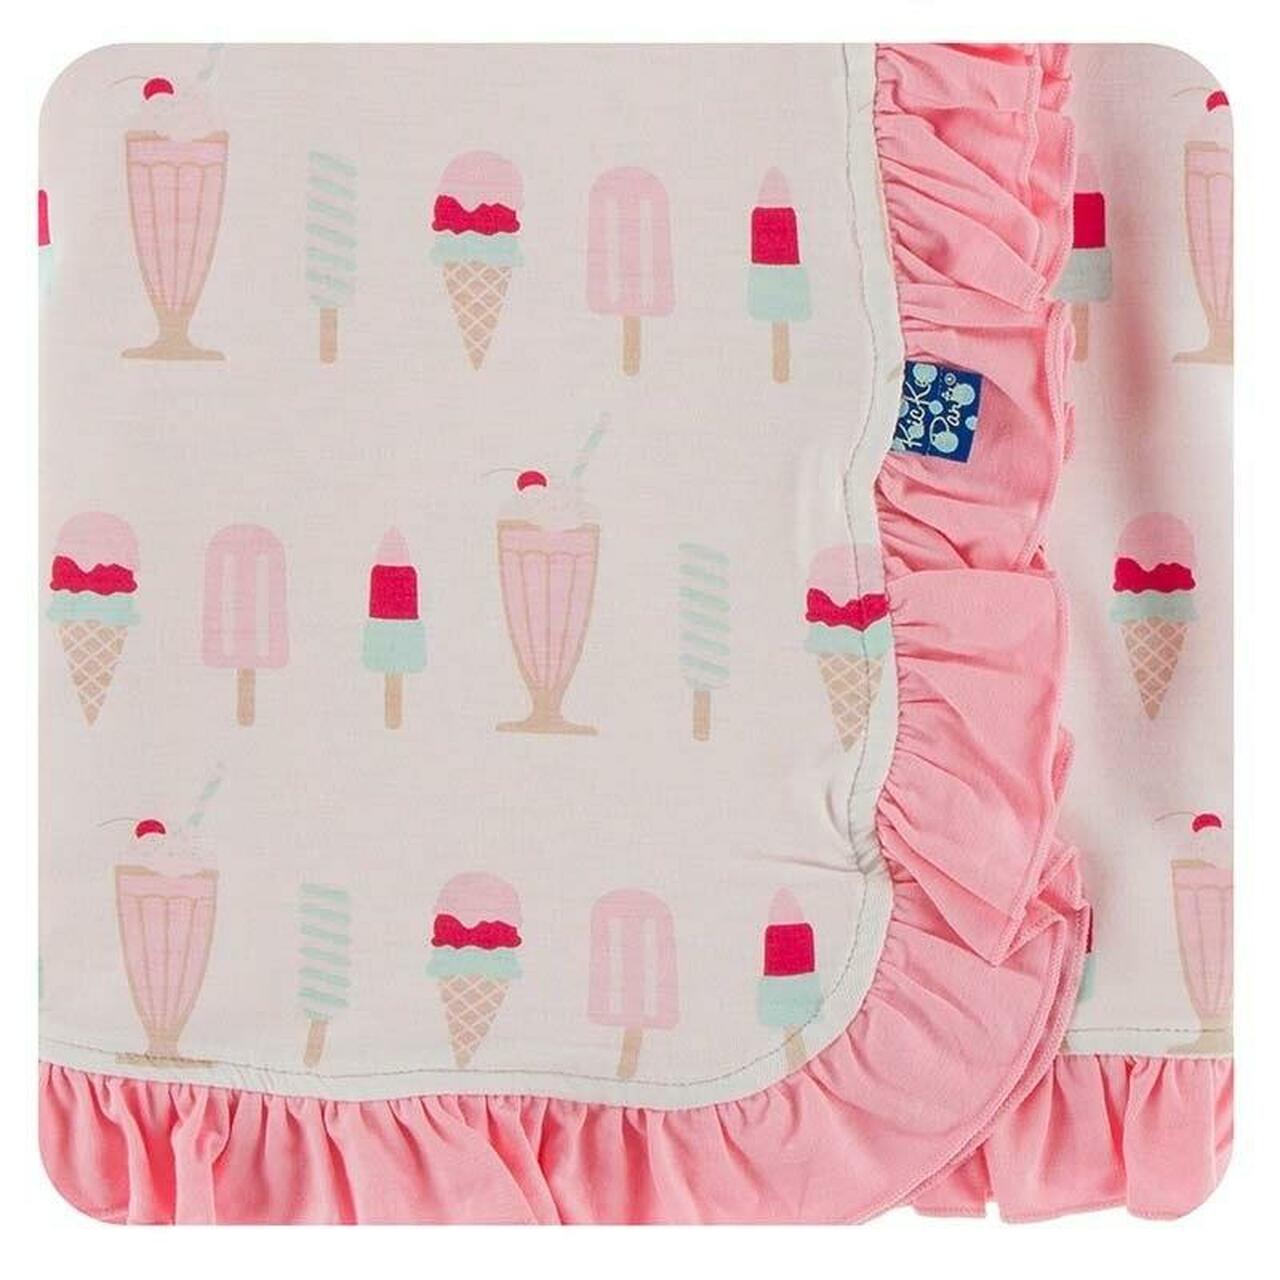 Natural Ice Cream Shop Ruffle Toddler Blanket